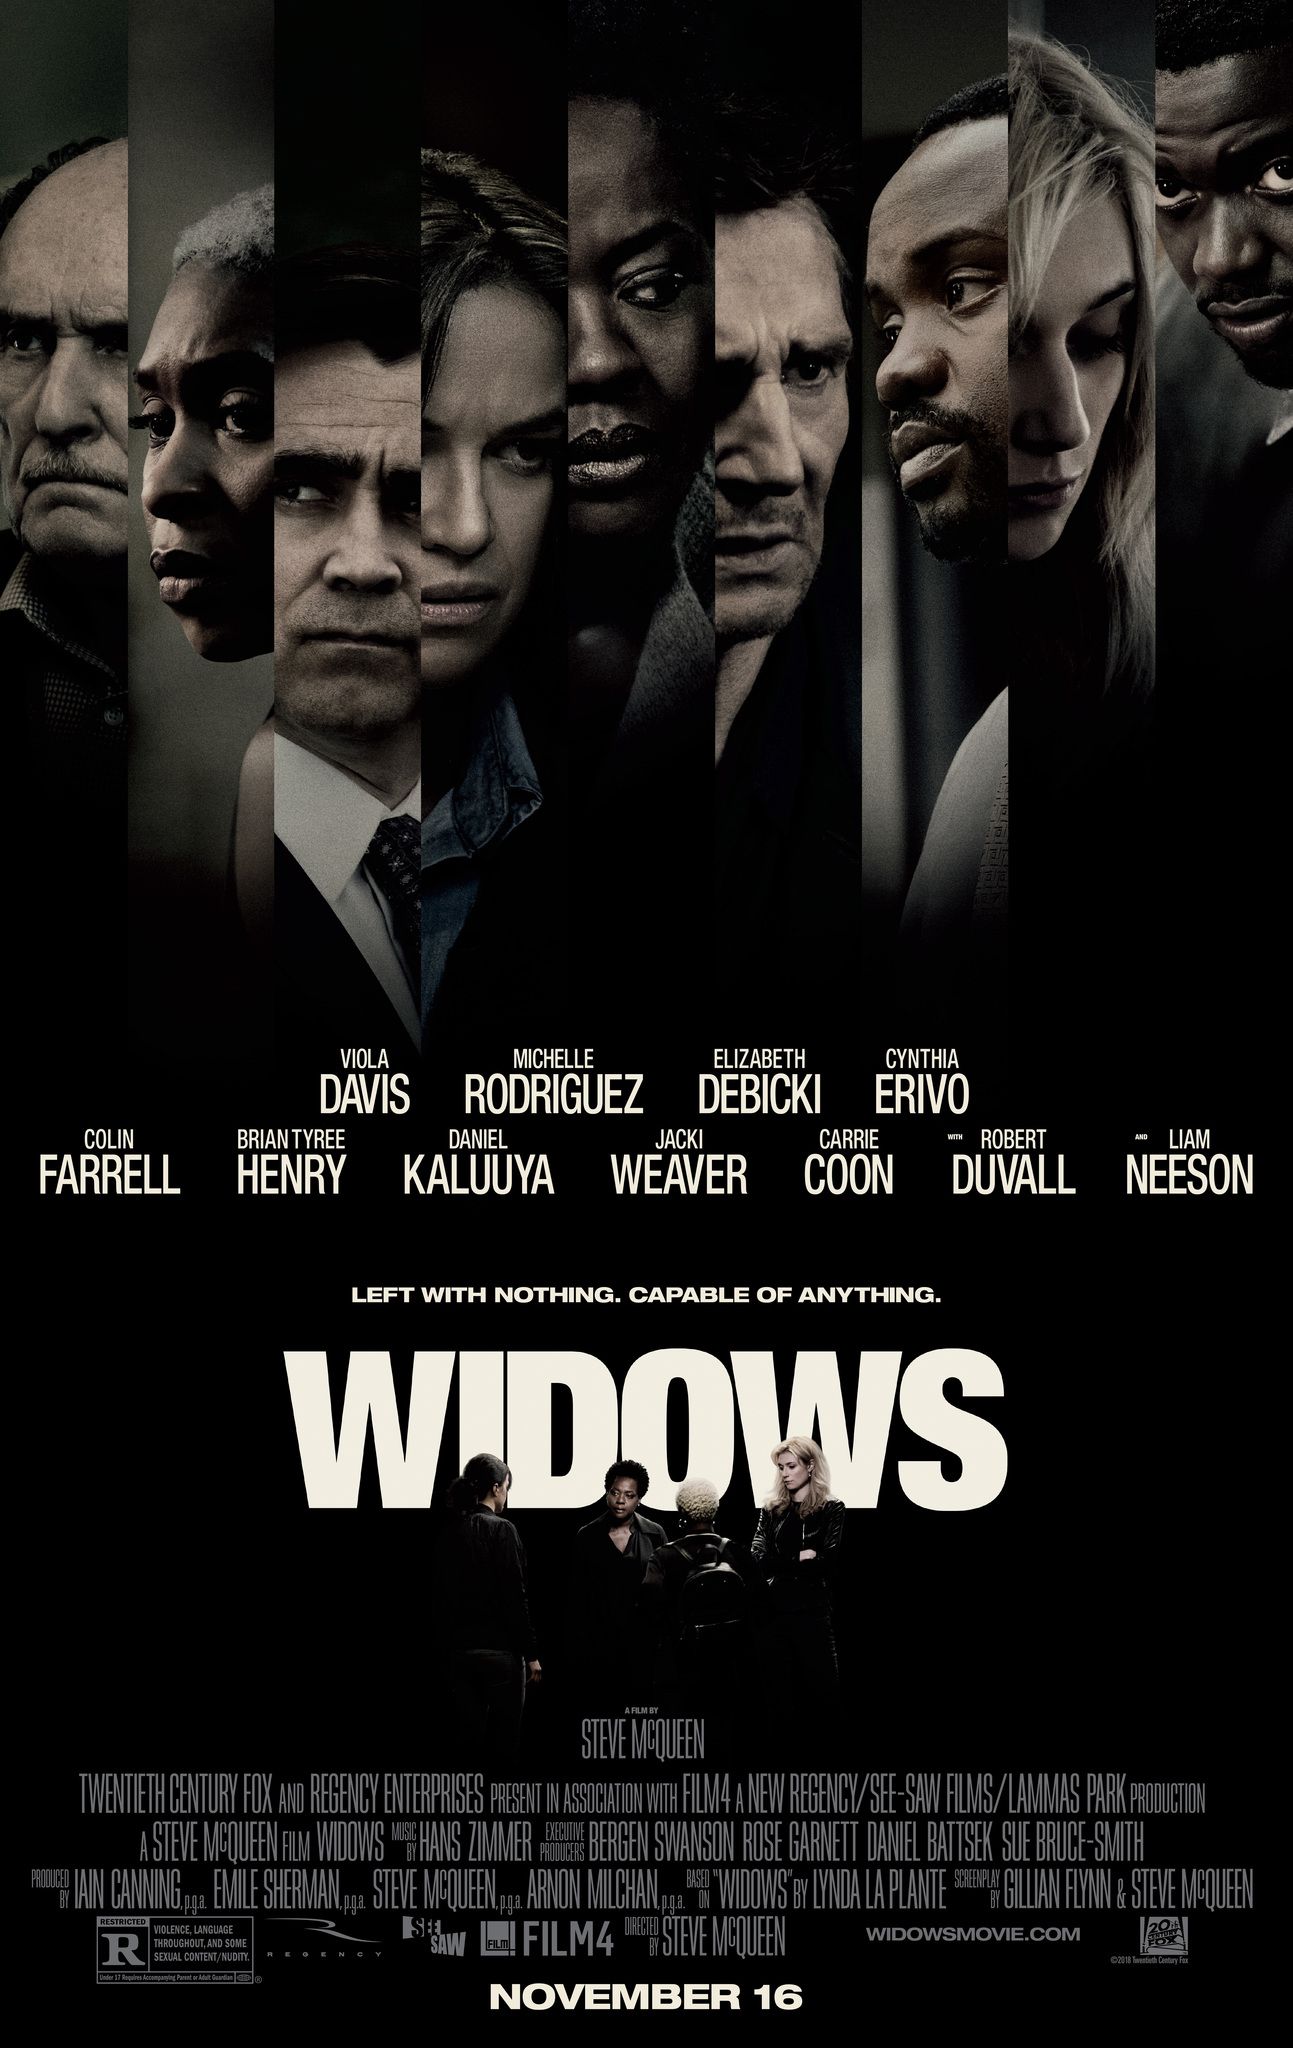 Widows (2018) Hindi Dubbed Full Movie